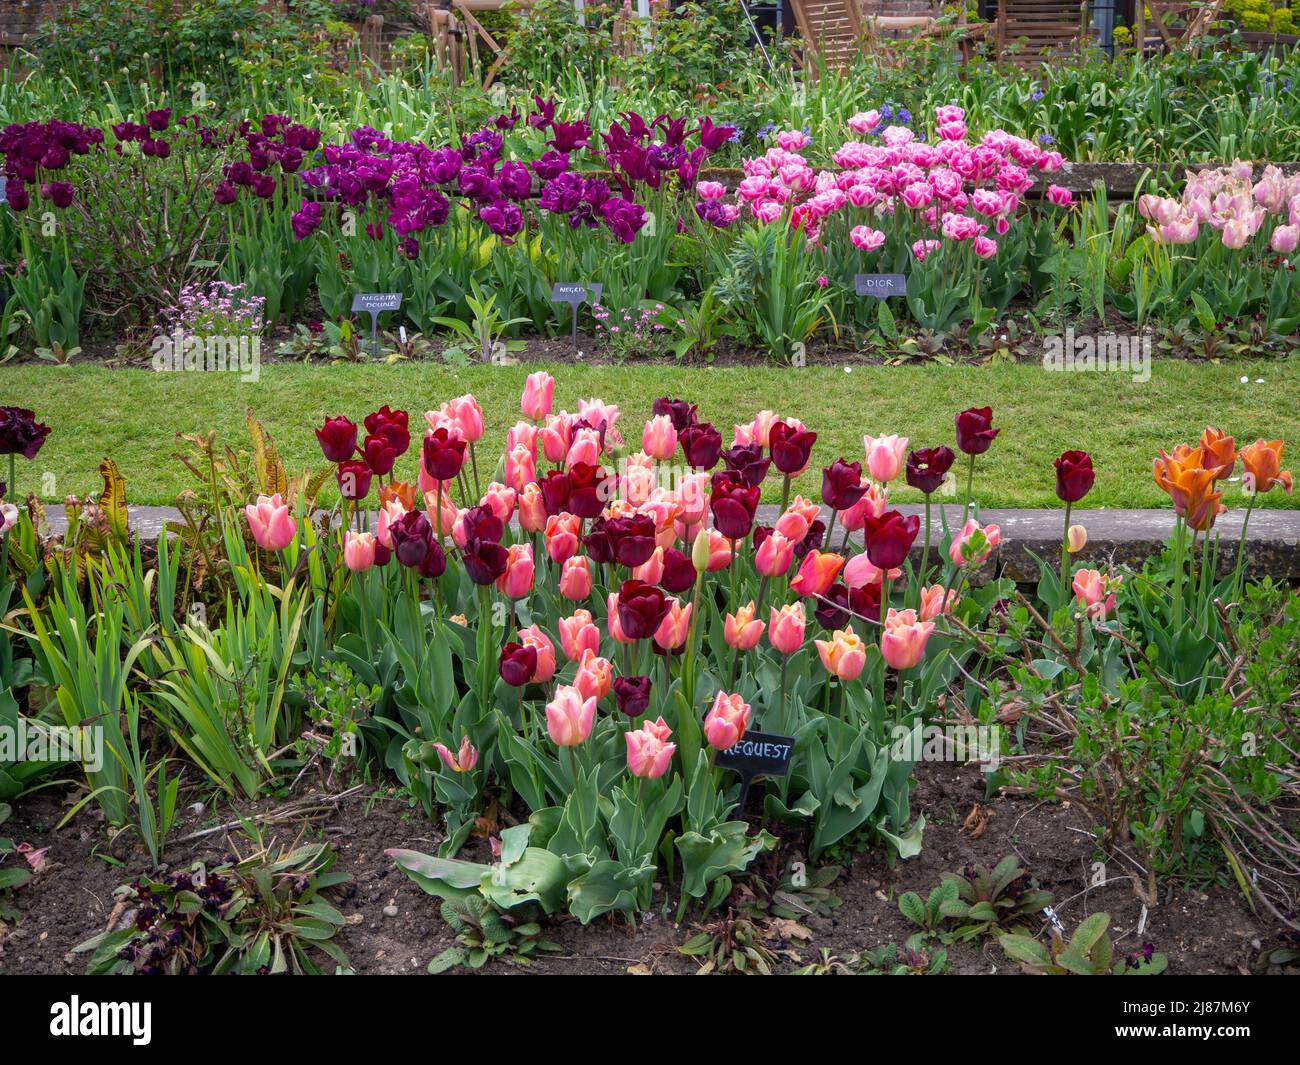 Chenies Manor Garden.der terrassenförmige, versunkene Garten mit bunten Tulpenschichten.Tulipa 'Request', Tulipa 'Dior', Tulipa 'Lachs Prince'. Stockfoto